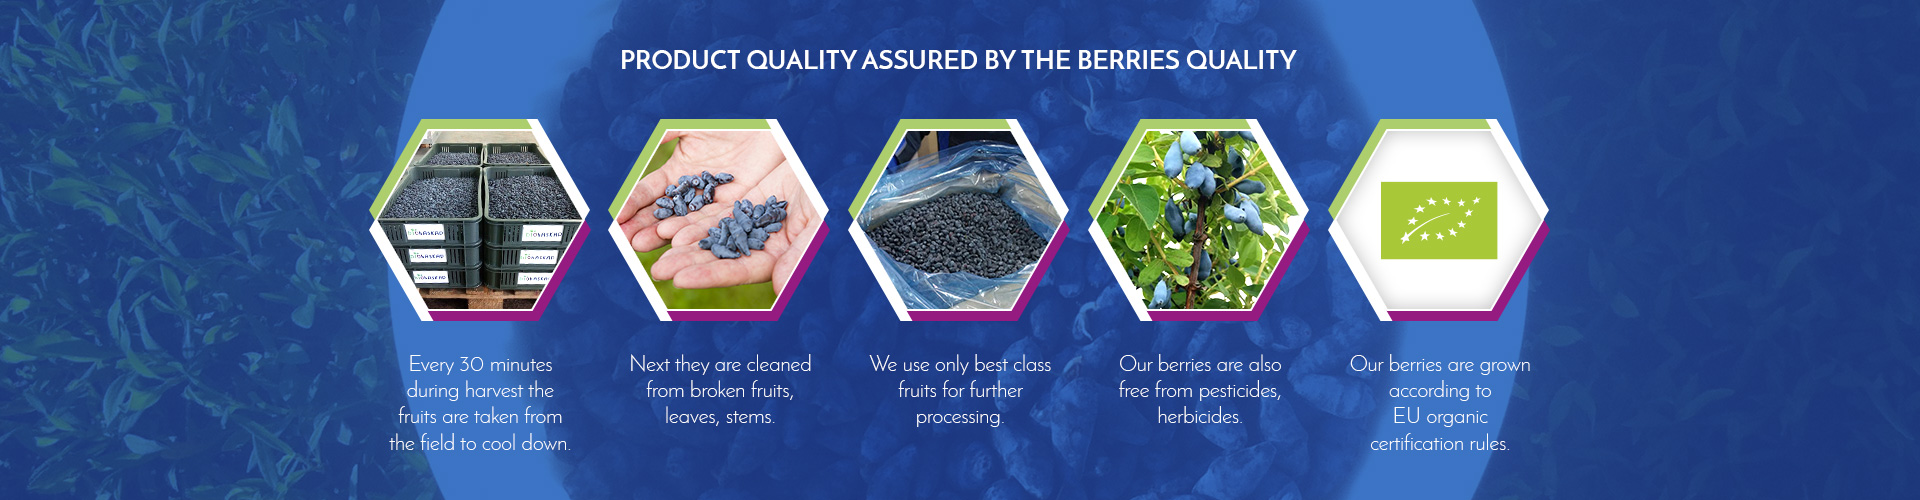 Product IQF organic haskap berry Nutracevit graph2